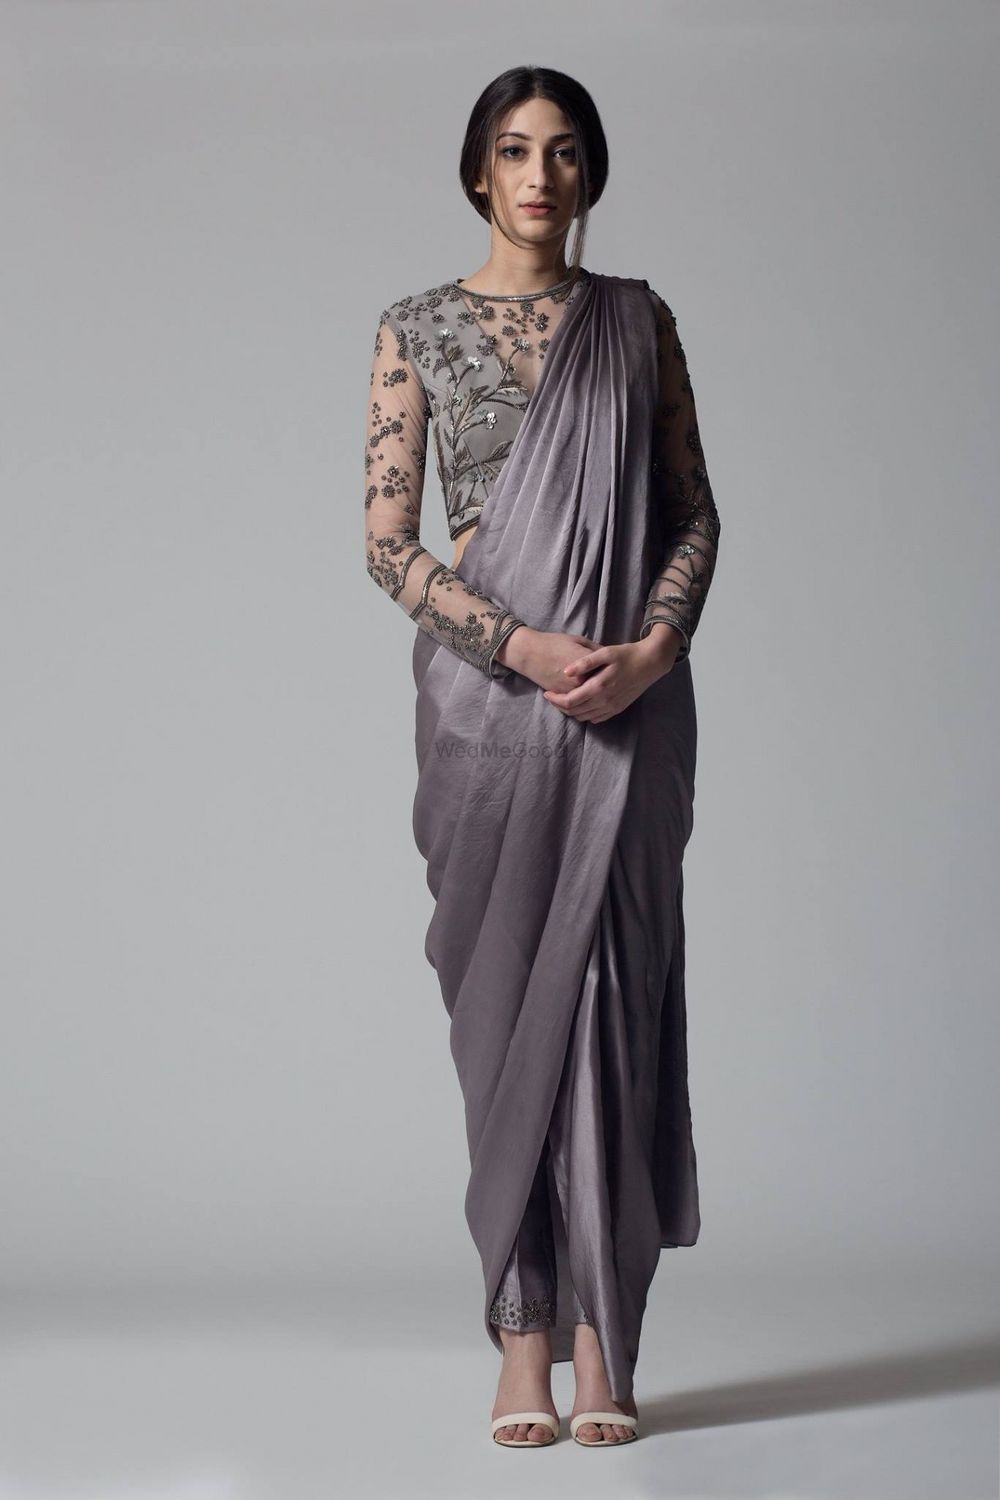 Photo of Dark Grey color drape saree